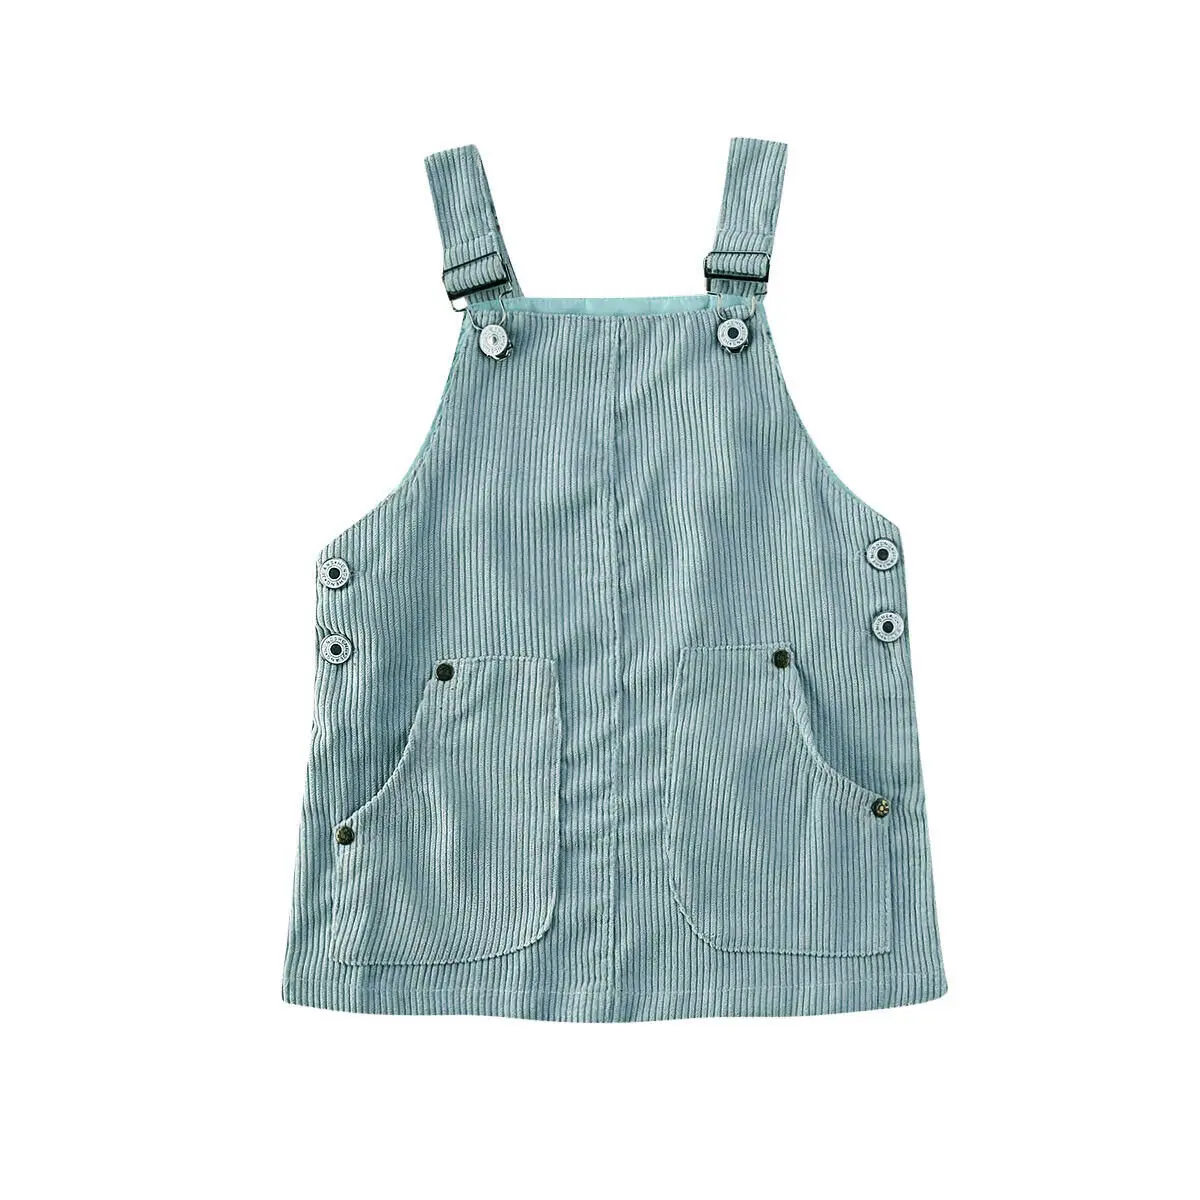 2020 Baby Sommer Tøj Barn Børn Baby Pige Mini Retro Kjole Rem Fløjlsbukser Kjole Seler Solid Overalls Outfit 0-5T